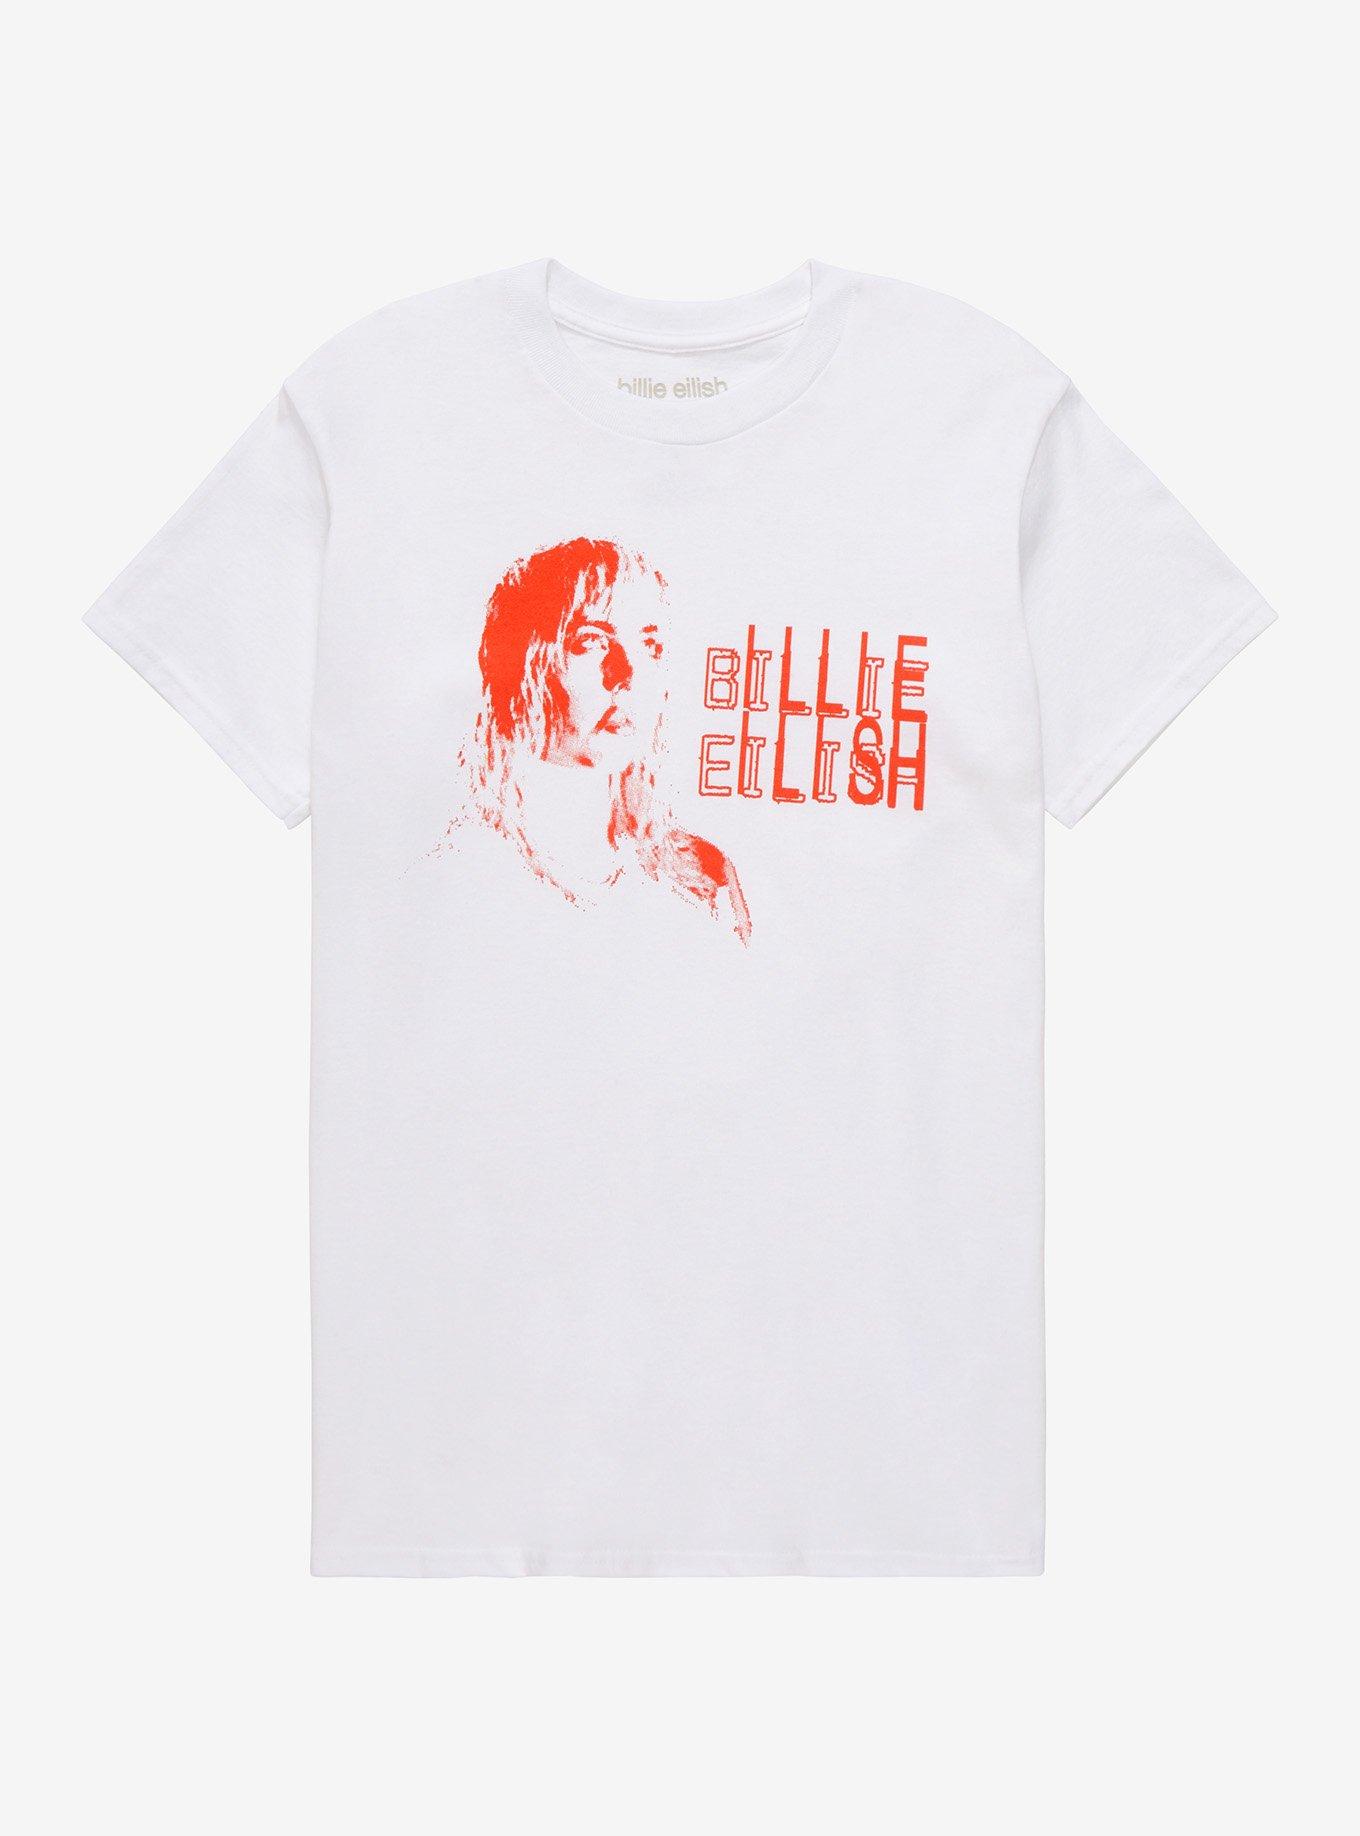 Billie Eilish Pixel Portrait Boyfriend Fit Girls T-Shirt | Hot Topic